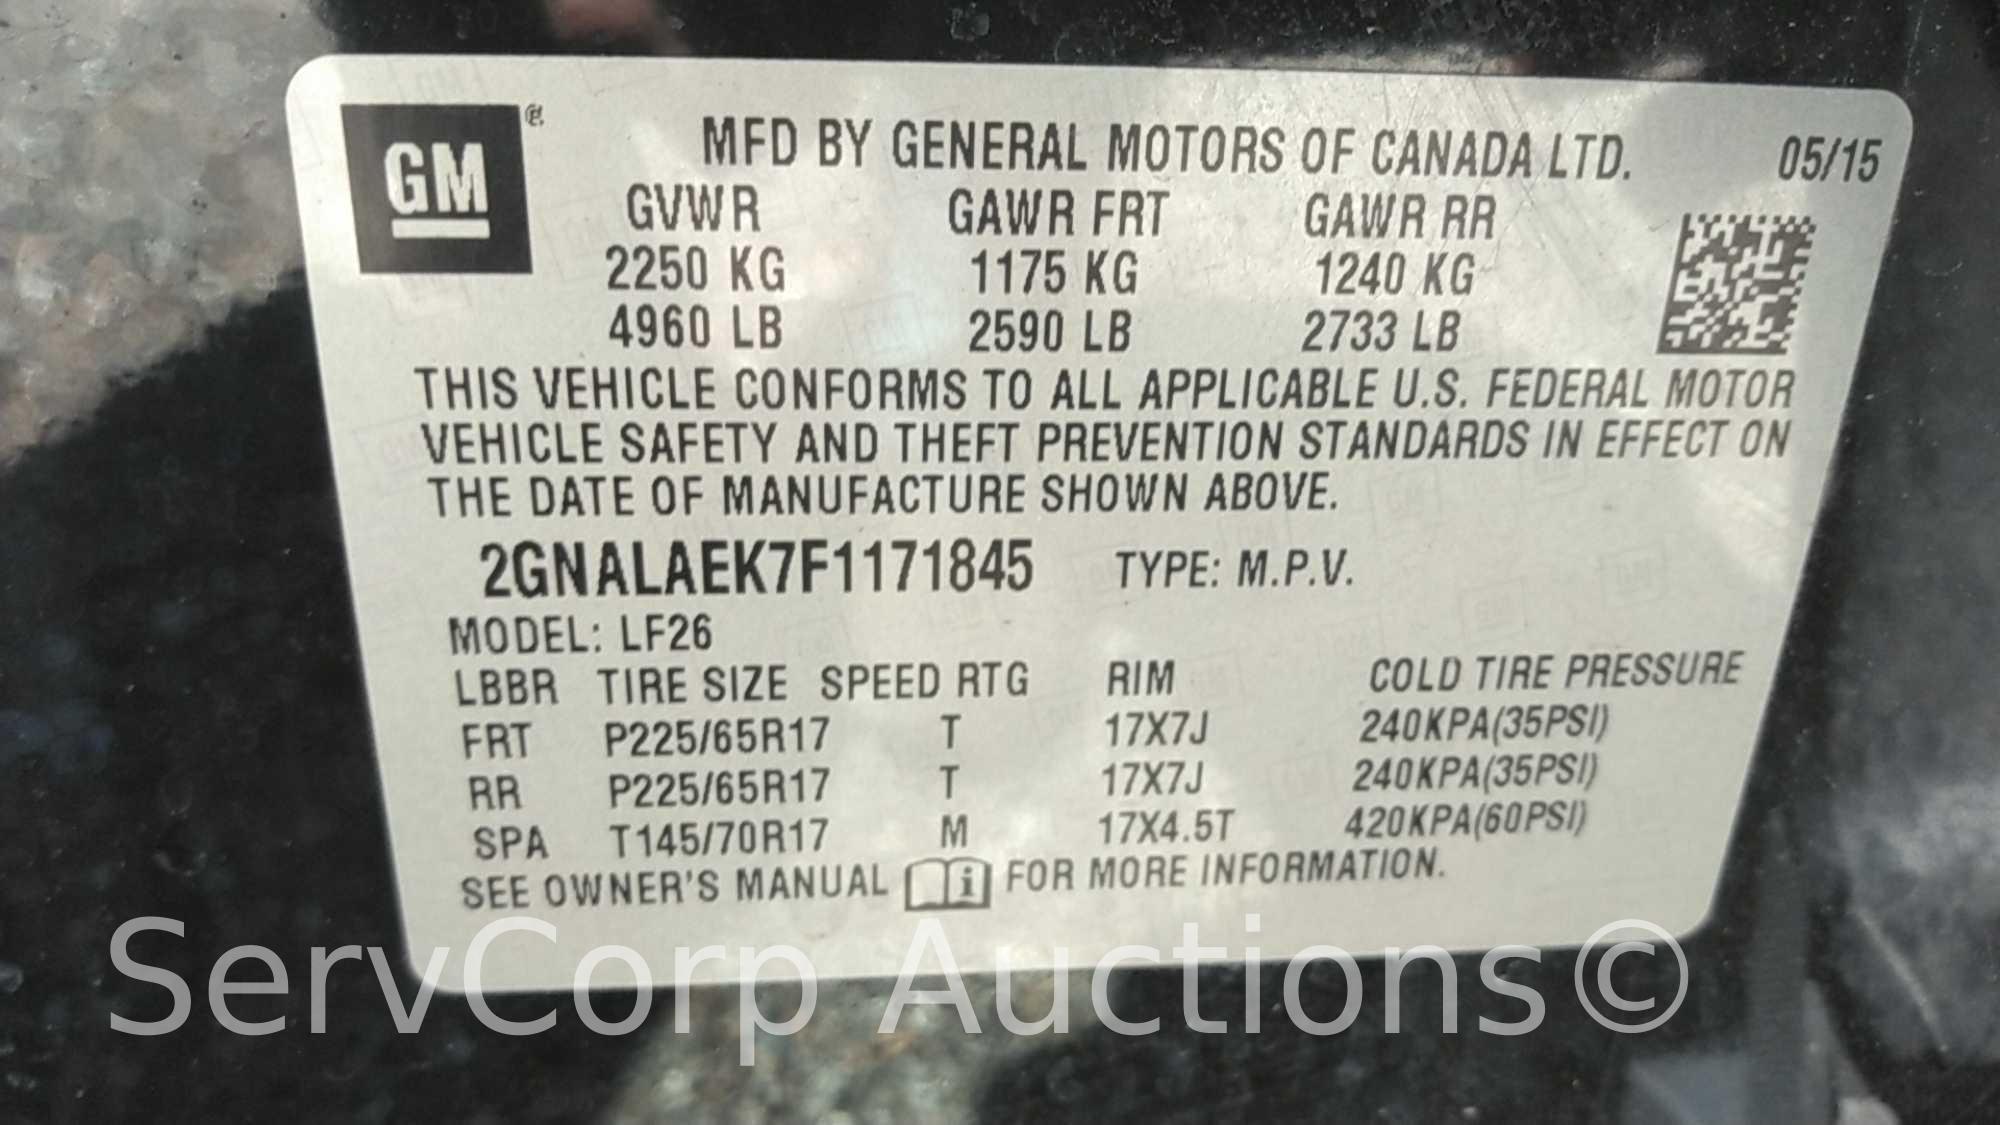 2015 Chevrolet Equinox Multipurpose Vehicle (MPV), VIN # 2GNALAEK7F1171845